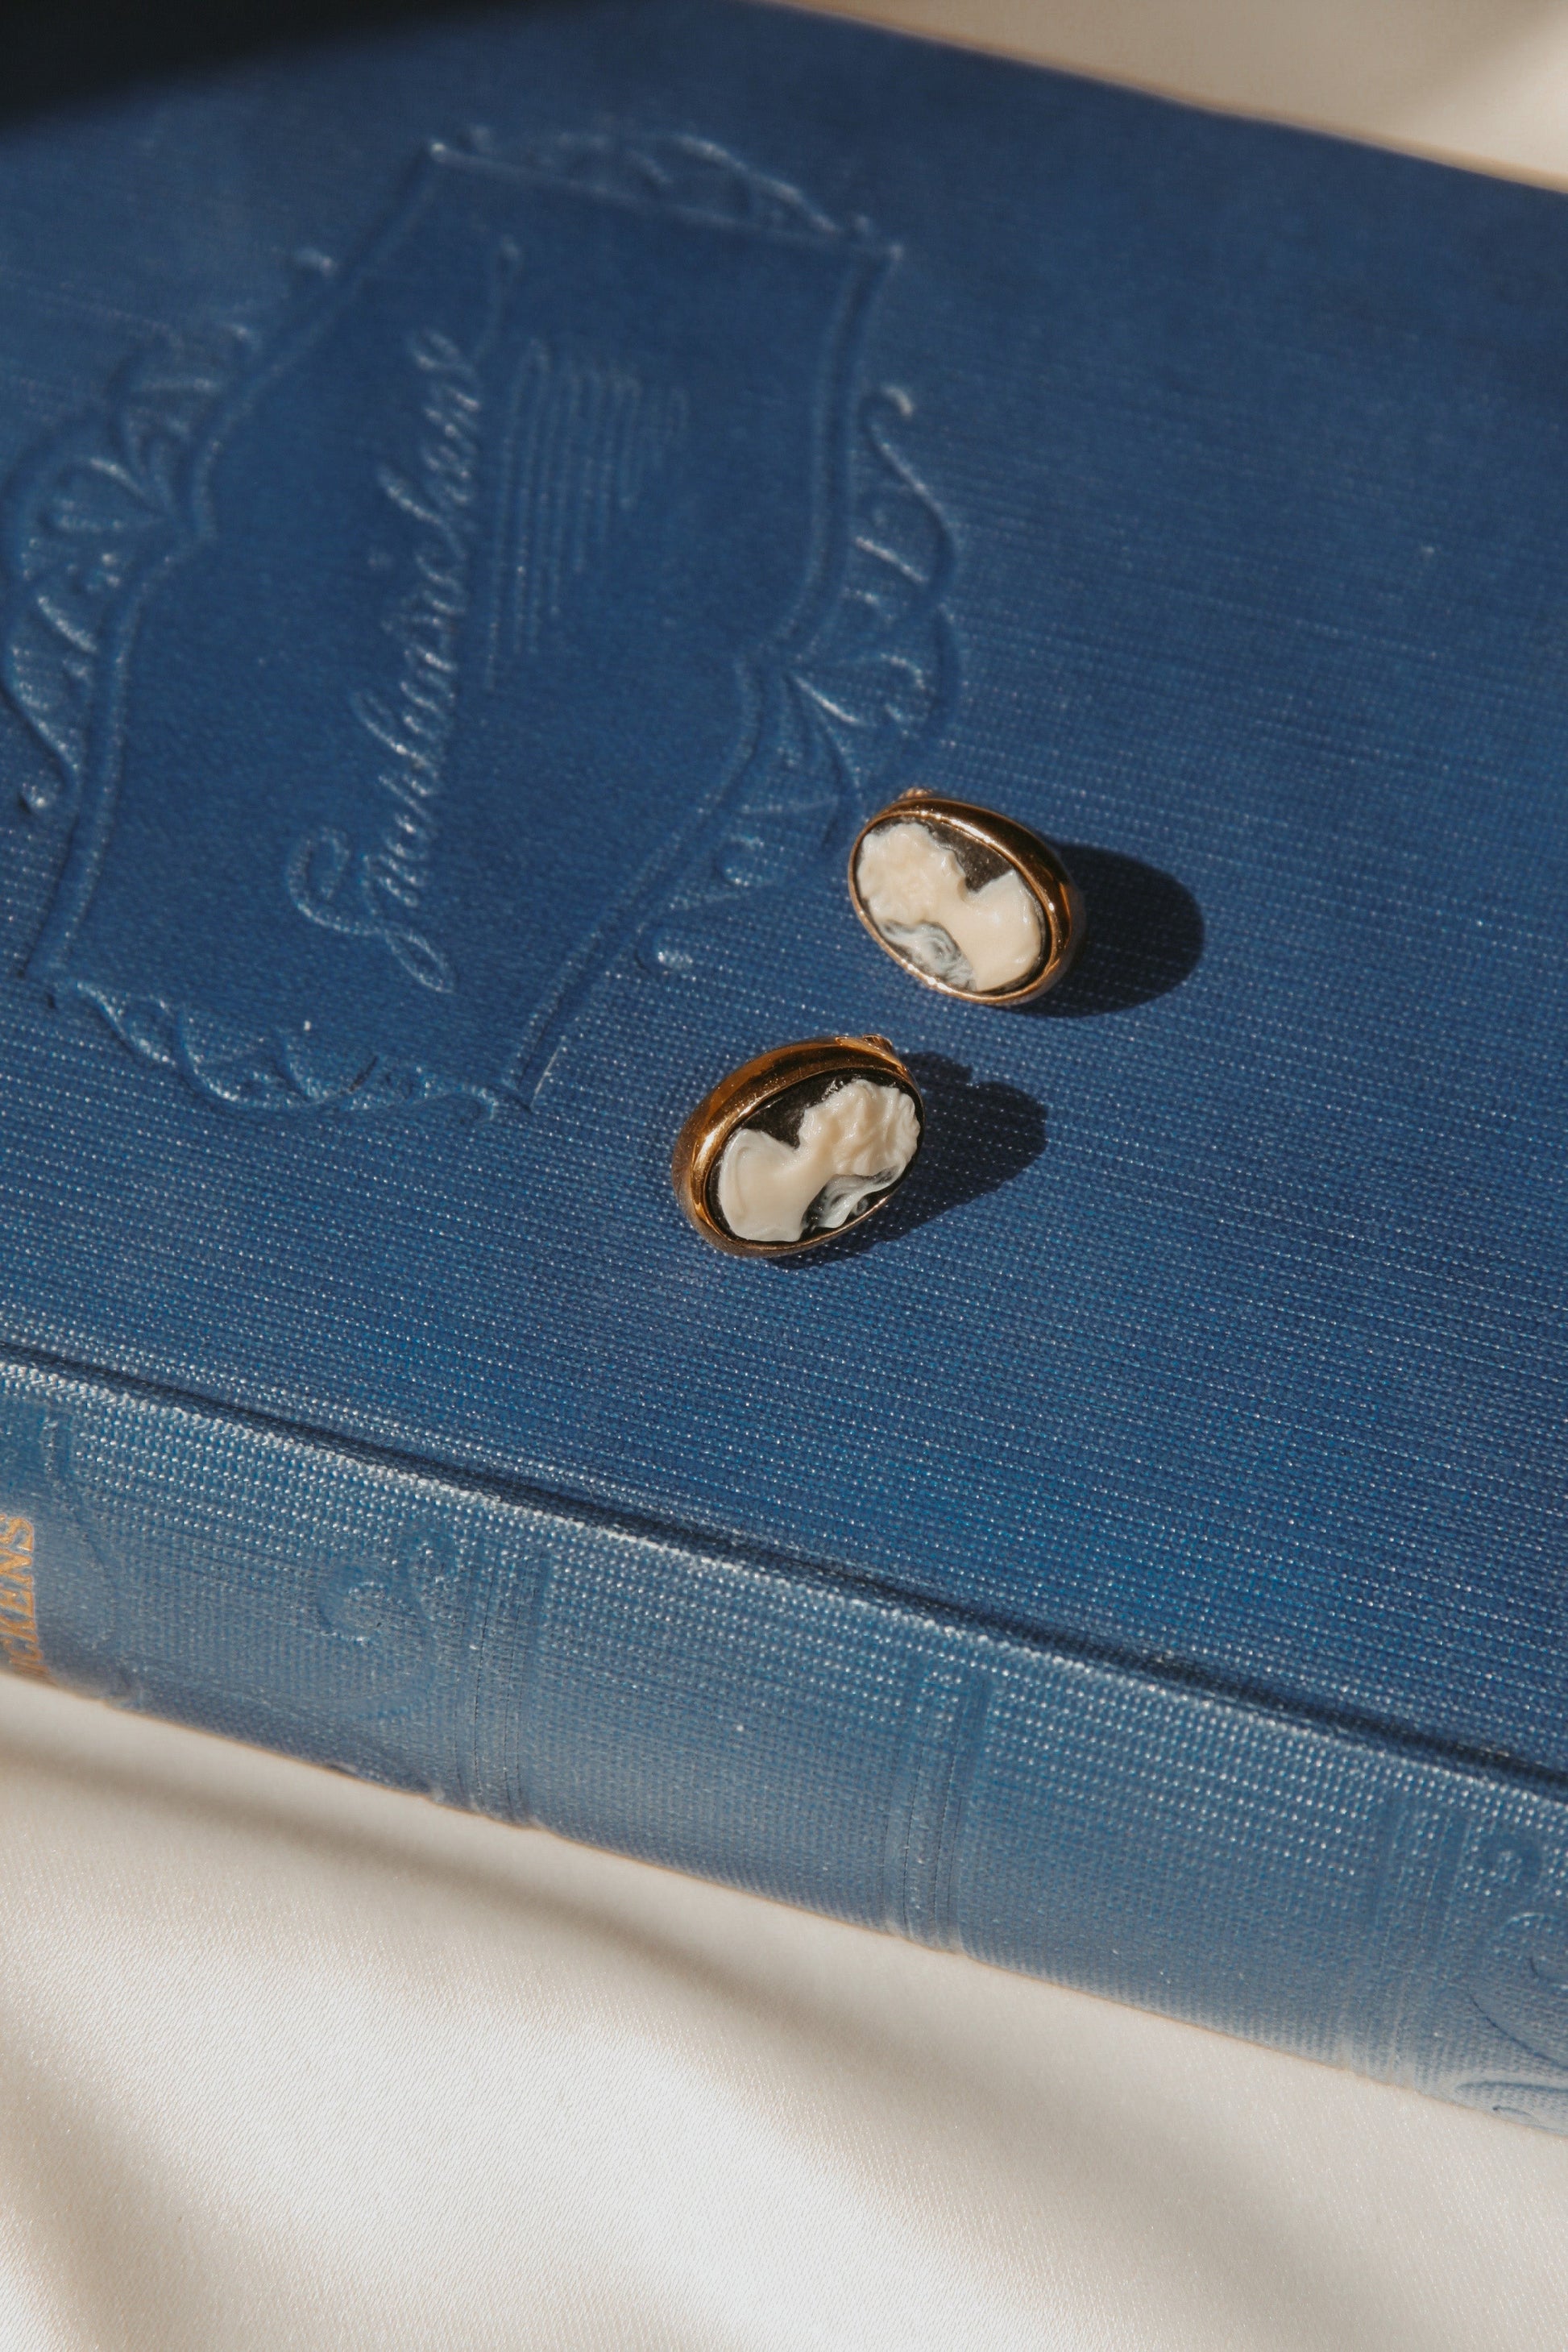 elinor dashwood jane austen inspired vintage cameo earrings by bookish jewellery brand Avery Faye London